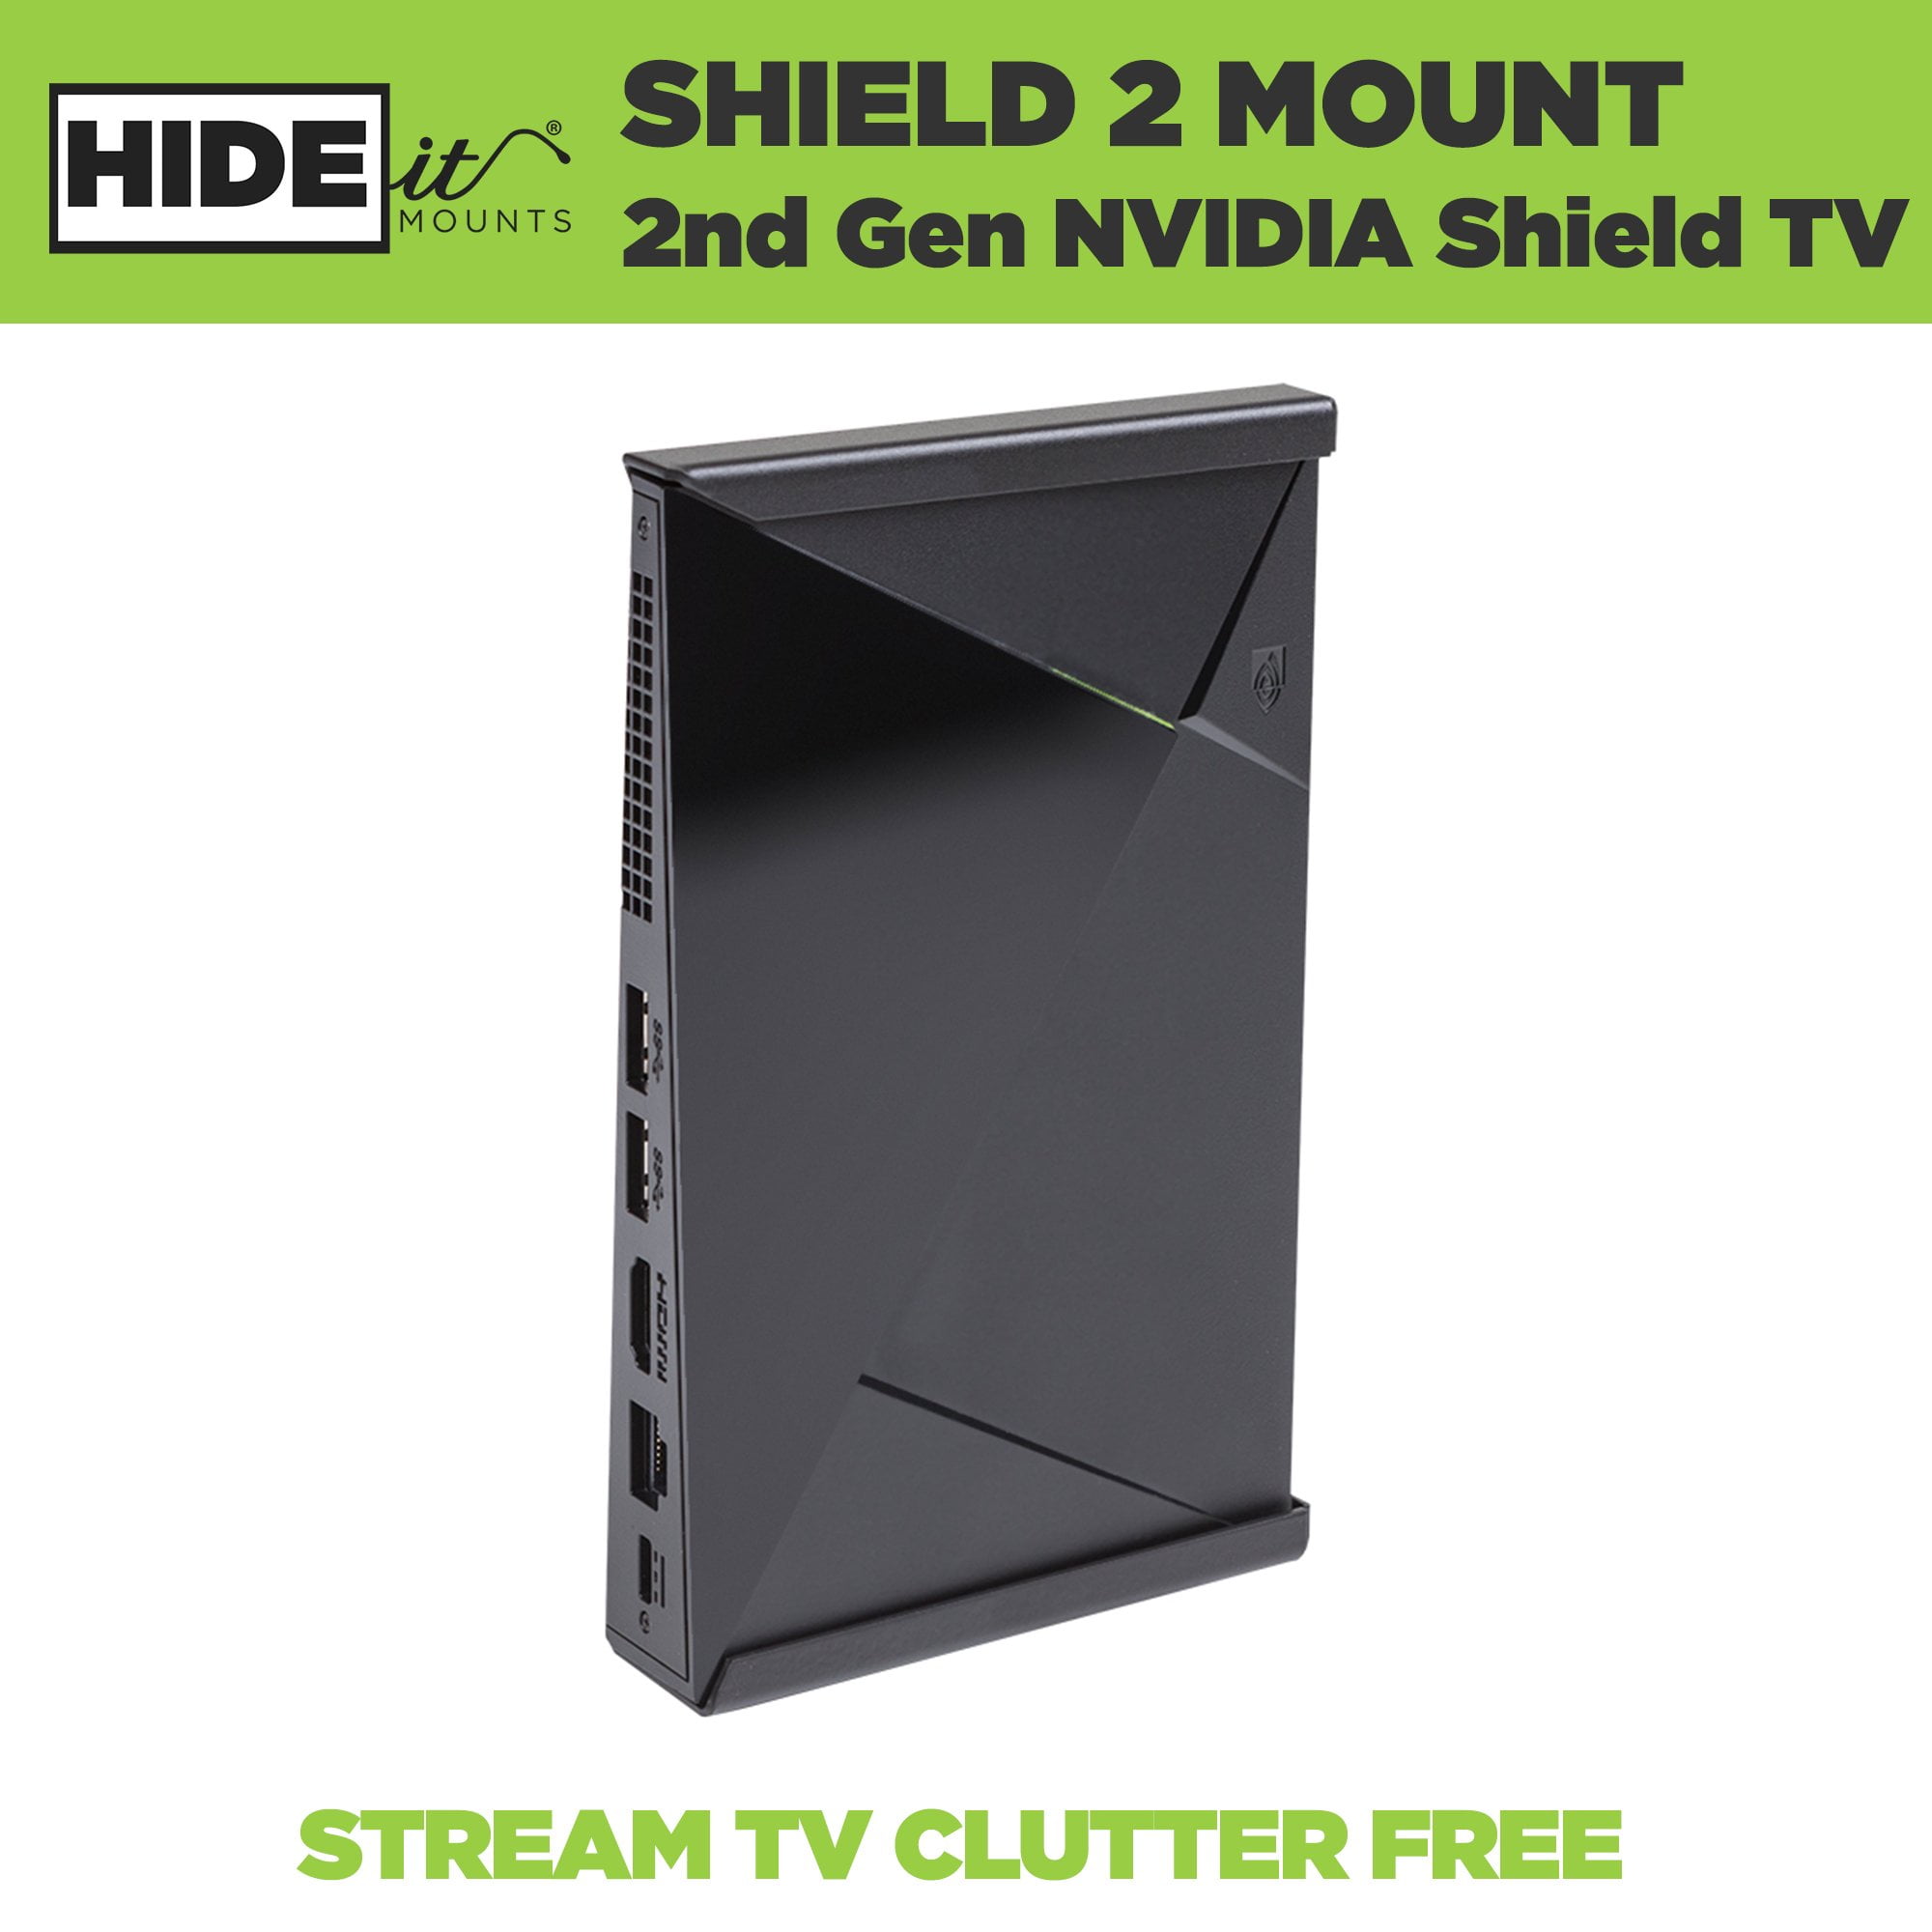 HIDEit Mounts Shield 2 NVIDIA Shield TV Pro Wall Mount for NVIDIA